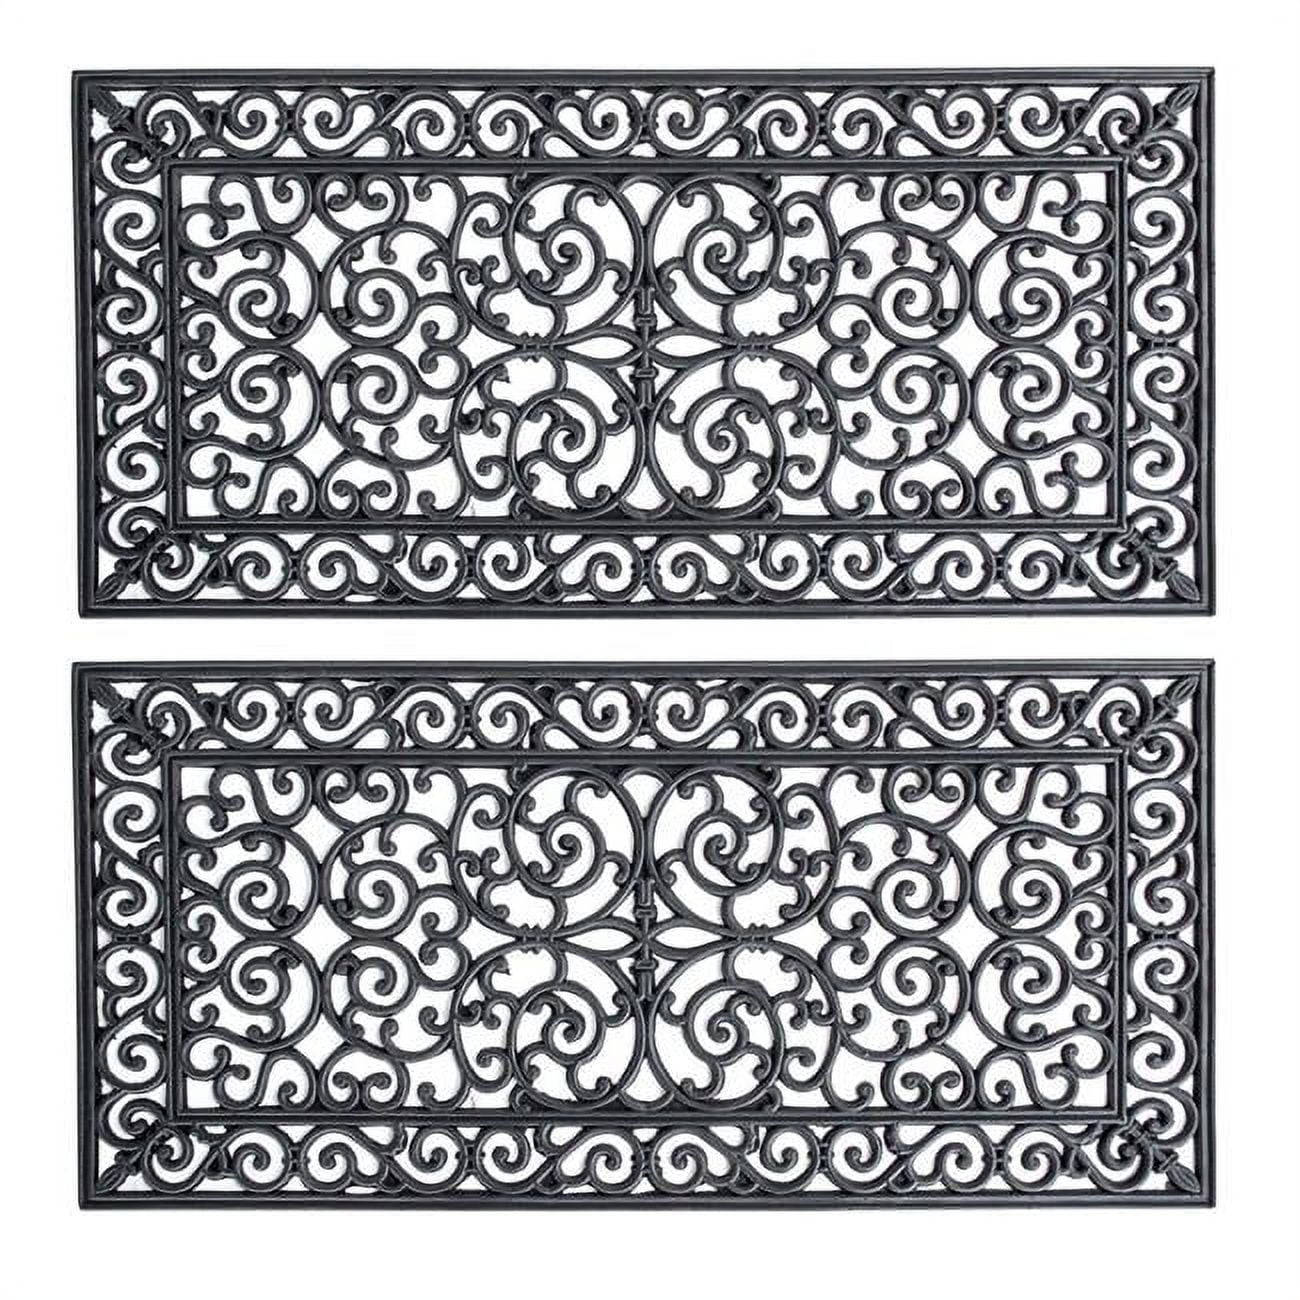 Picture of AmeriHome RMATDE42-2PK 4 x 2 ft. Decorative Scrollwork Entryway Rubber Door Mat, Black - Pack of 2